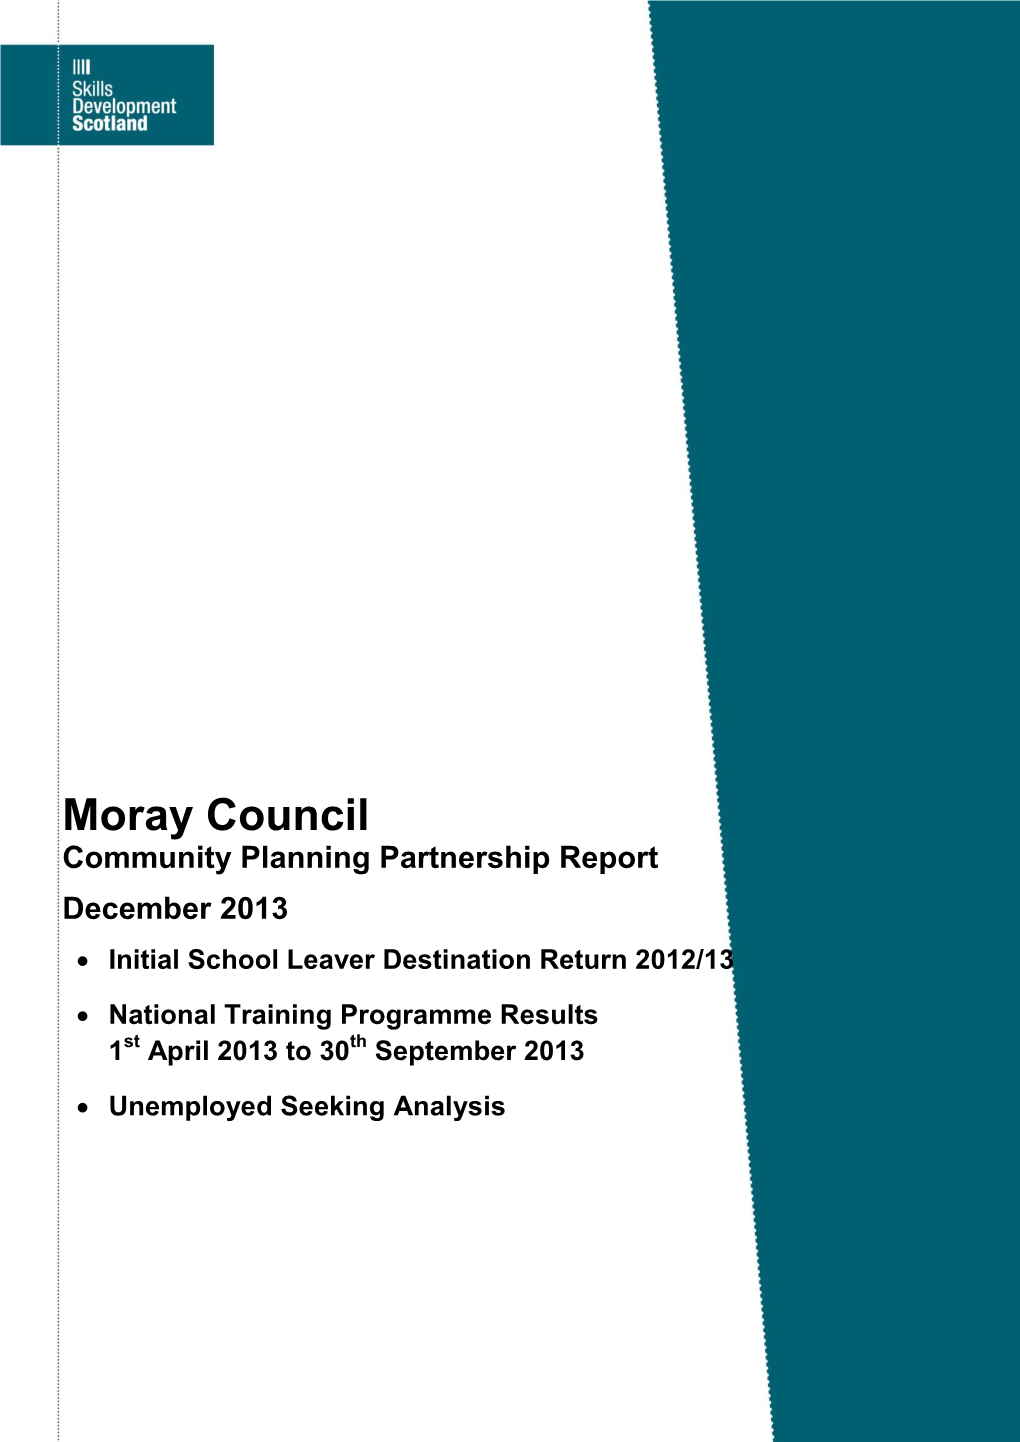 Moray Council Community Planning Partnership Report December 2013